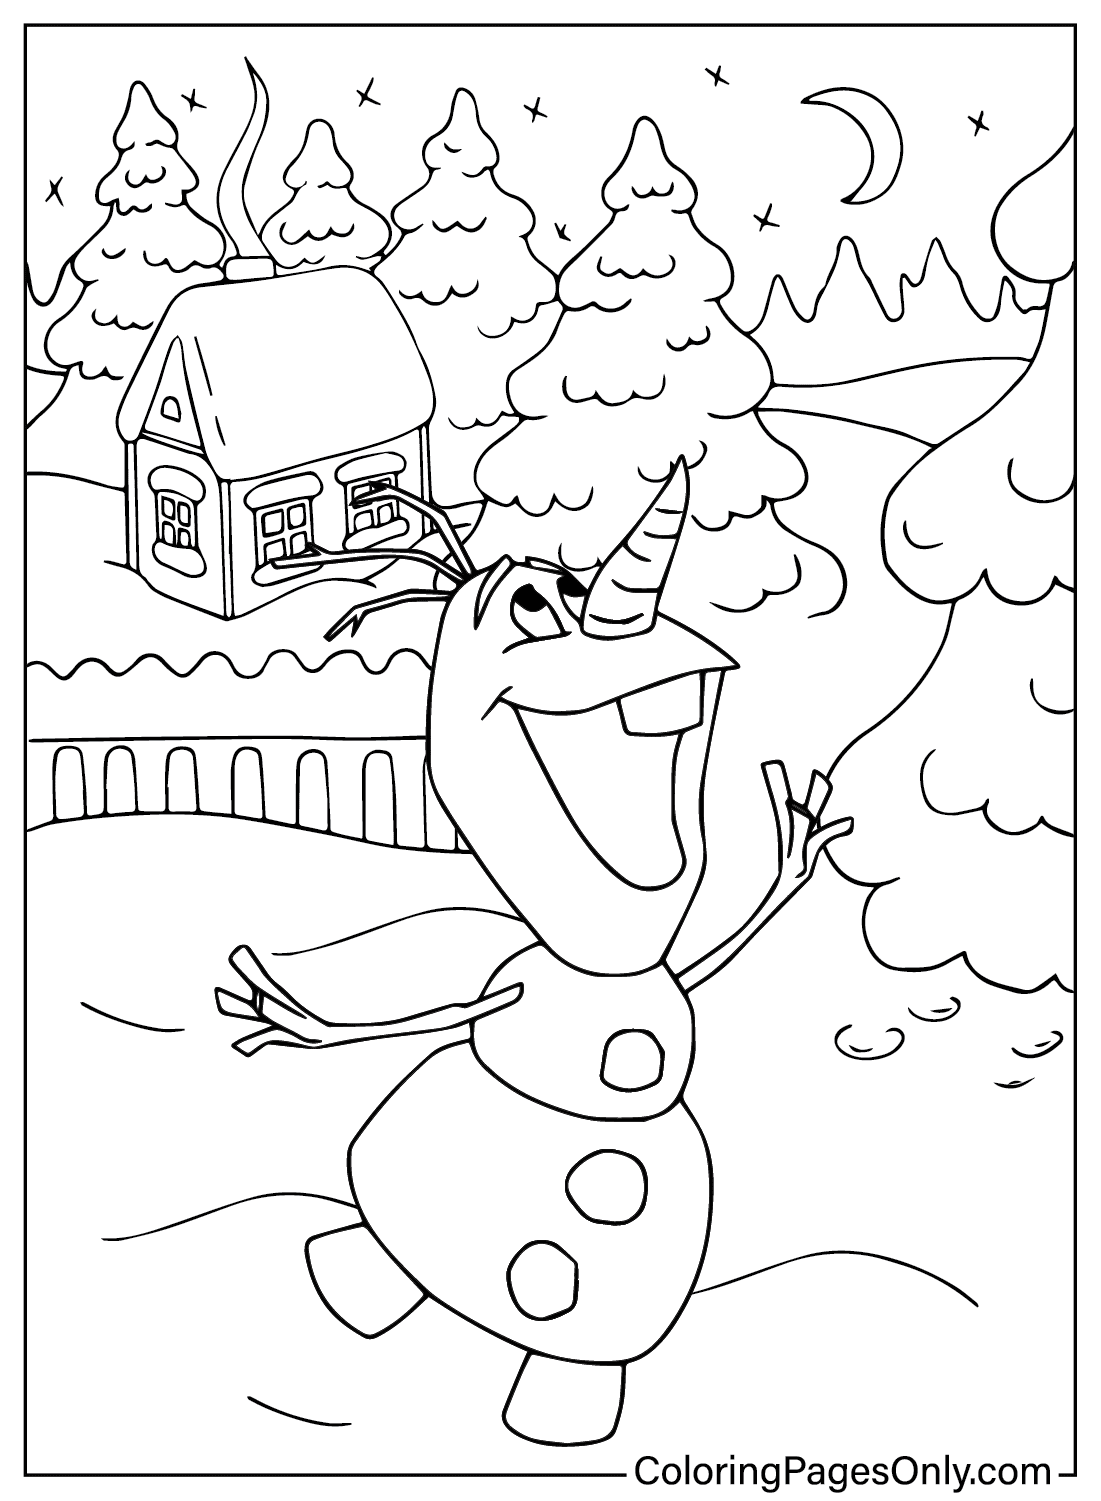 Página para colorir de boneco de neve engraçado